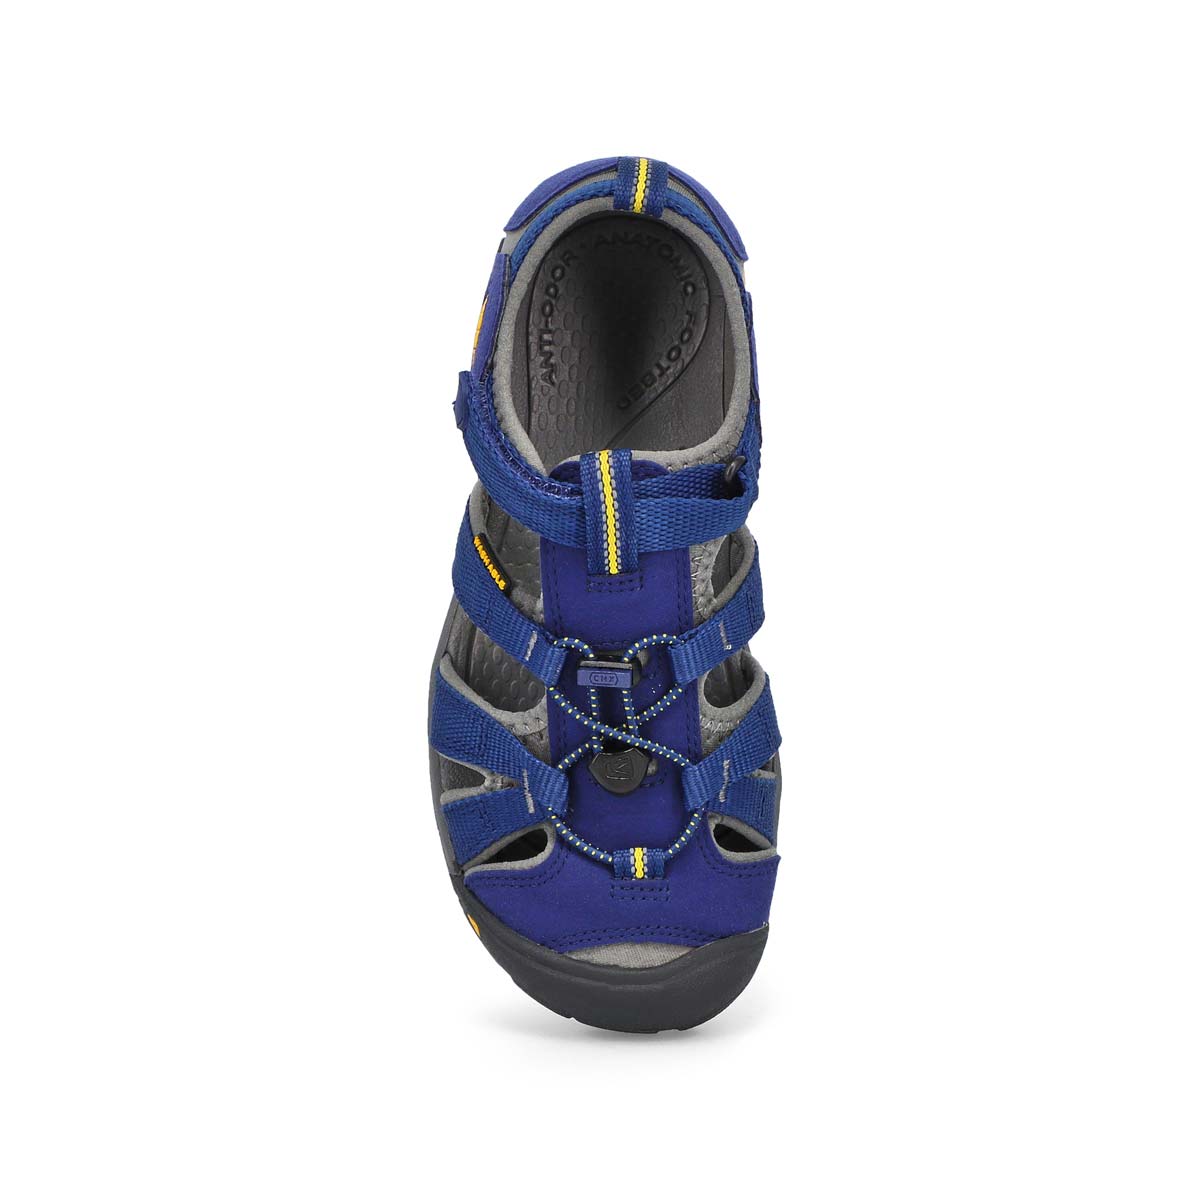 Boys' Seacamp II CNX Sport Sandal - Blue/Grgoyl